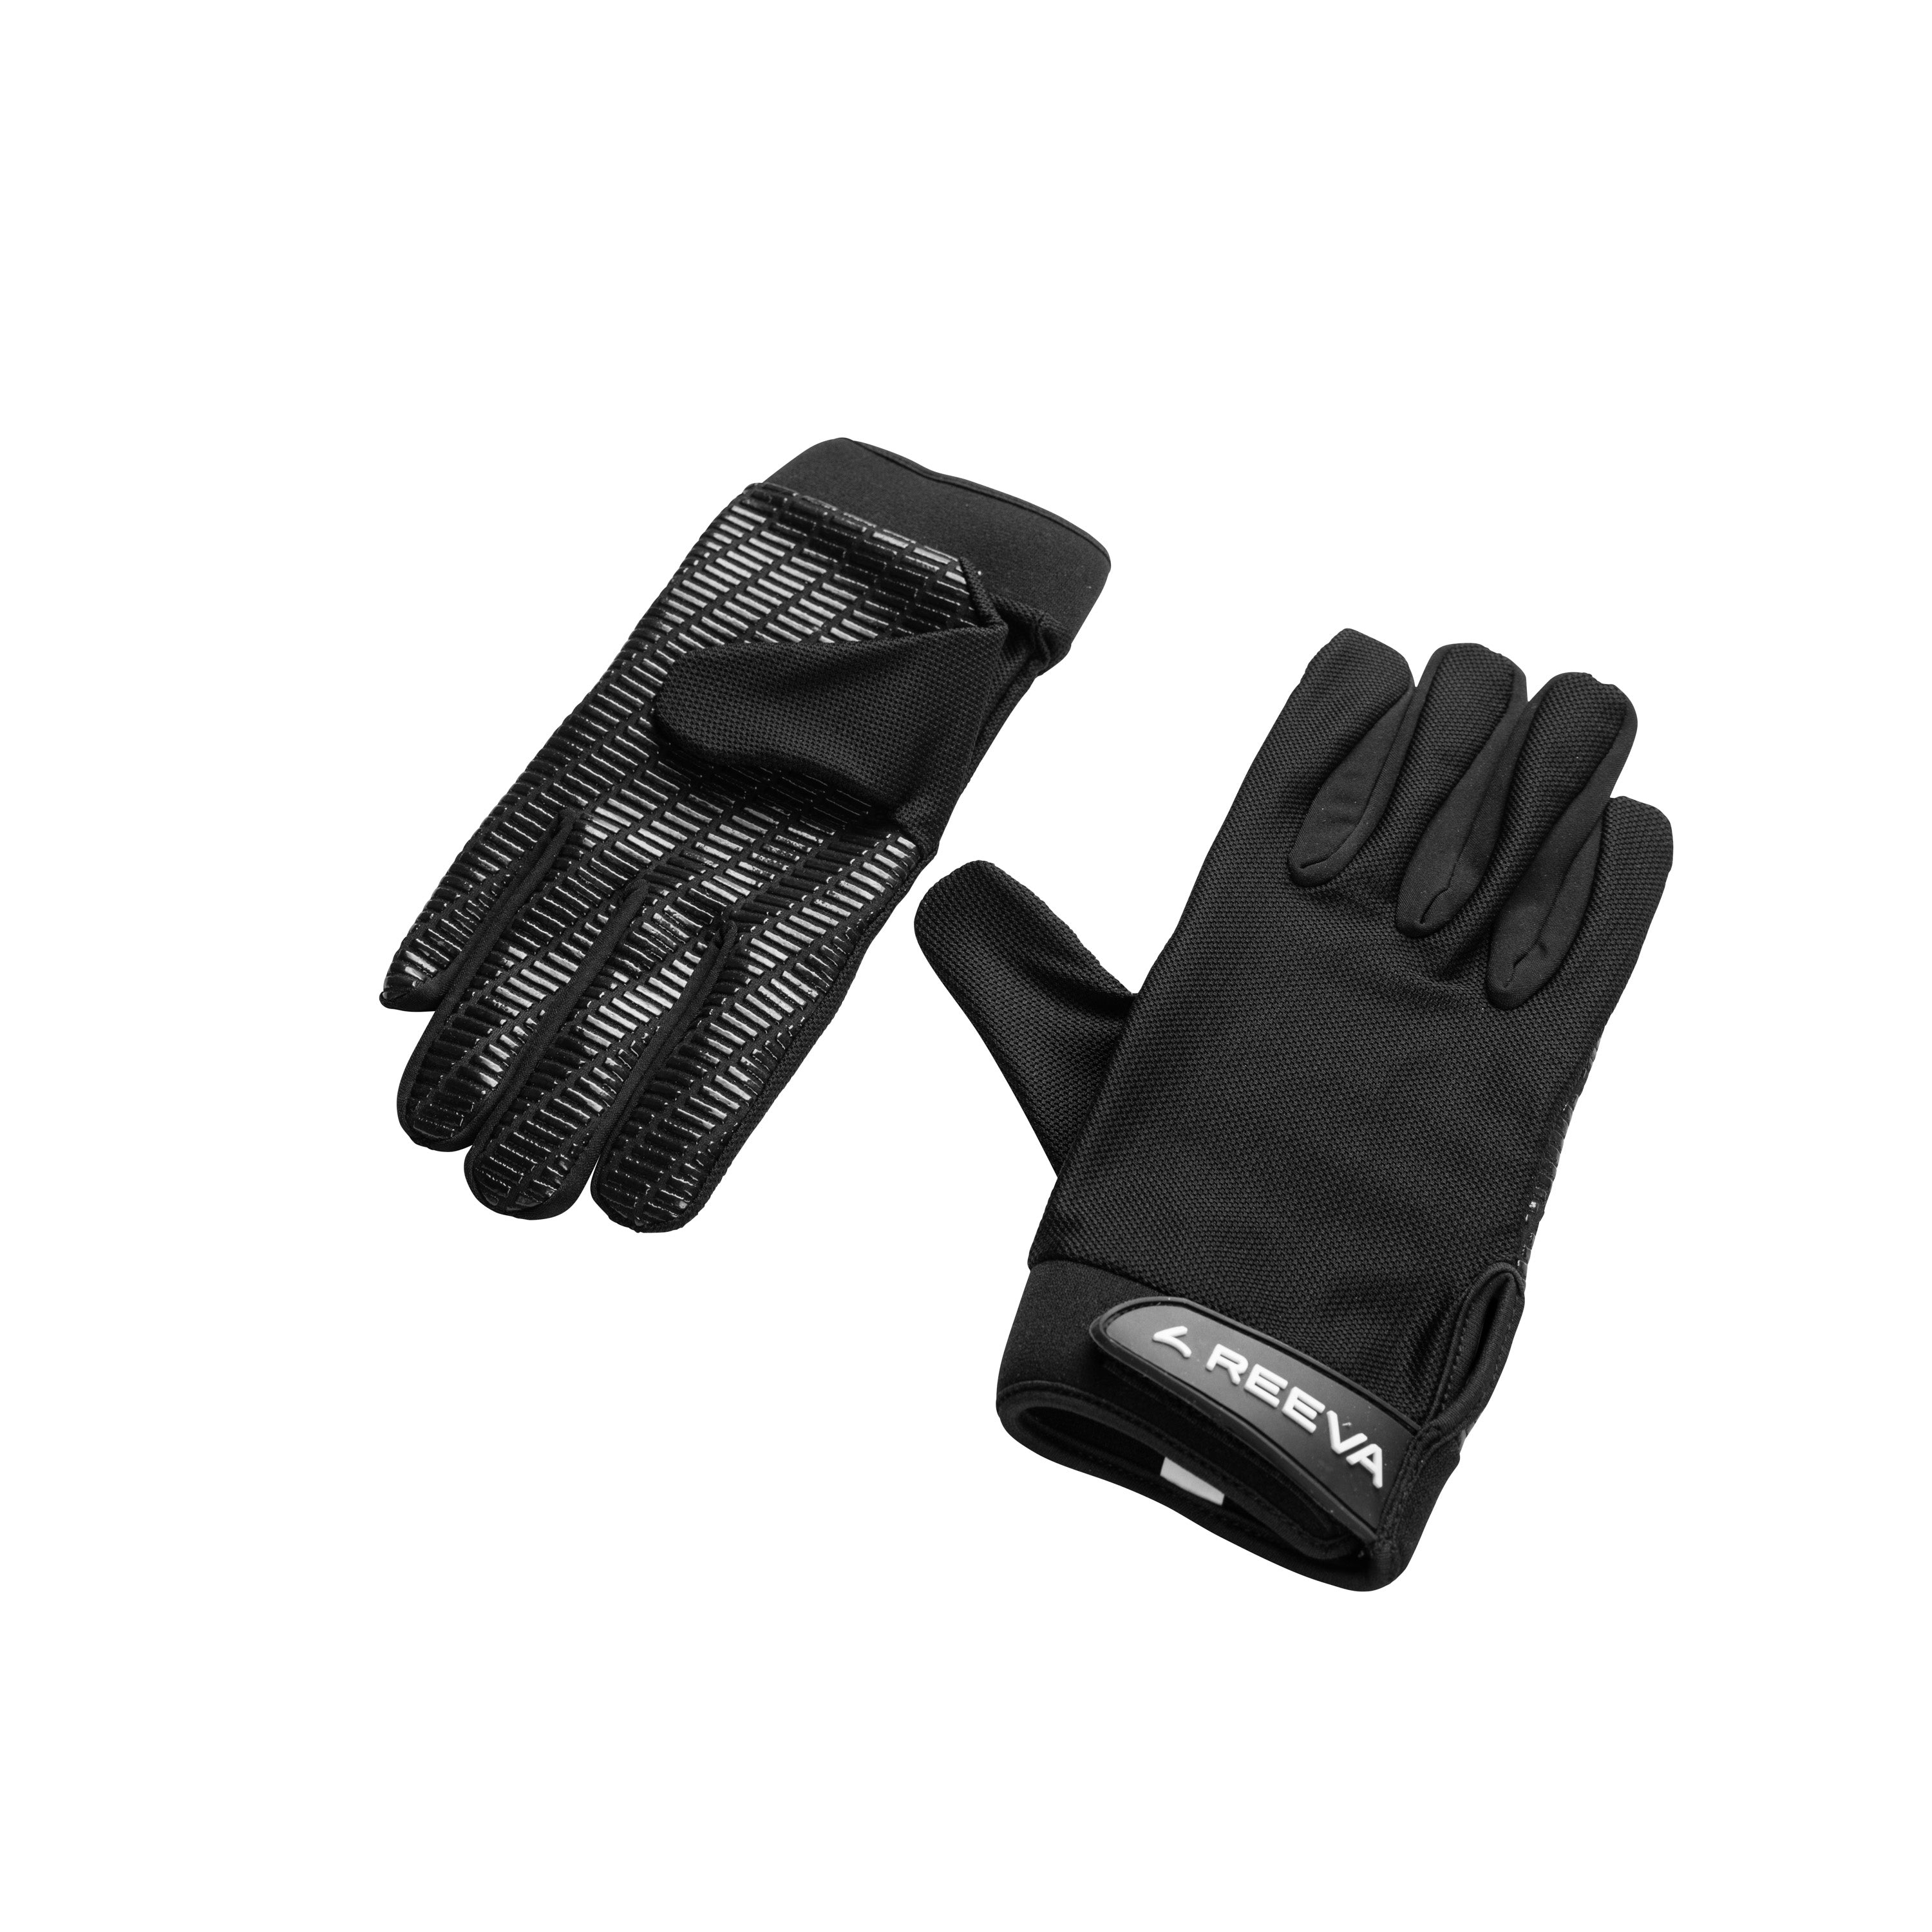 Ultra grip gloves